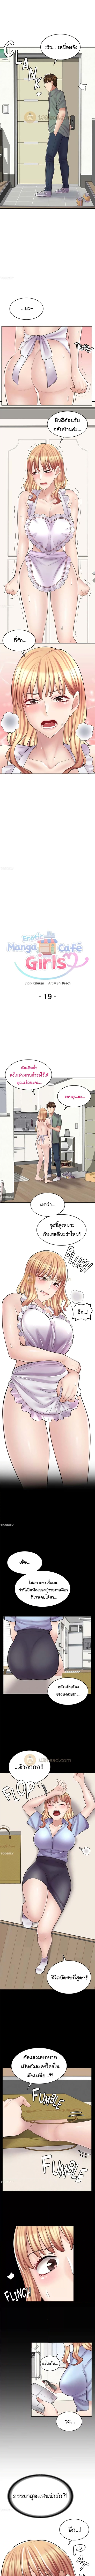 Erotic Manga CafÃ© Girls 19 (1)